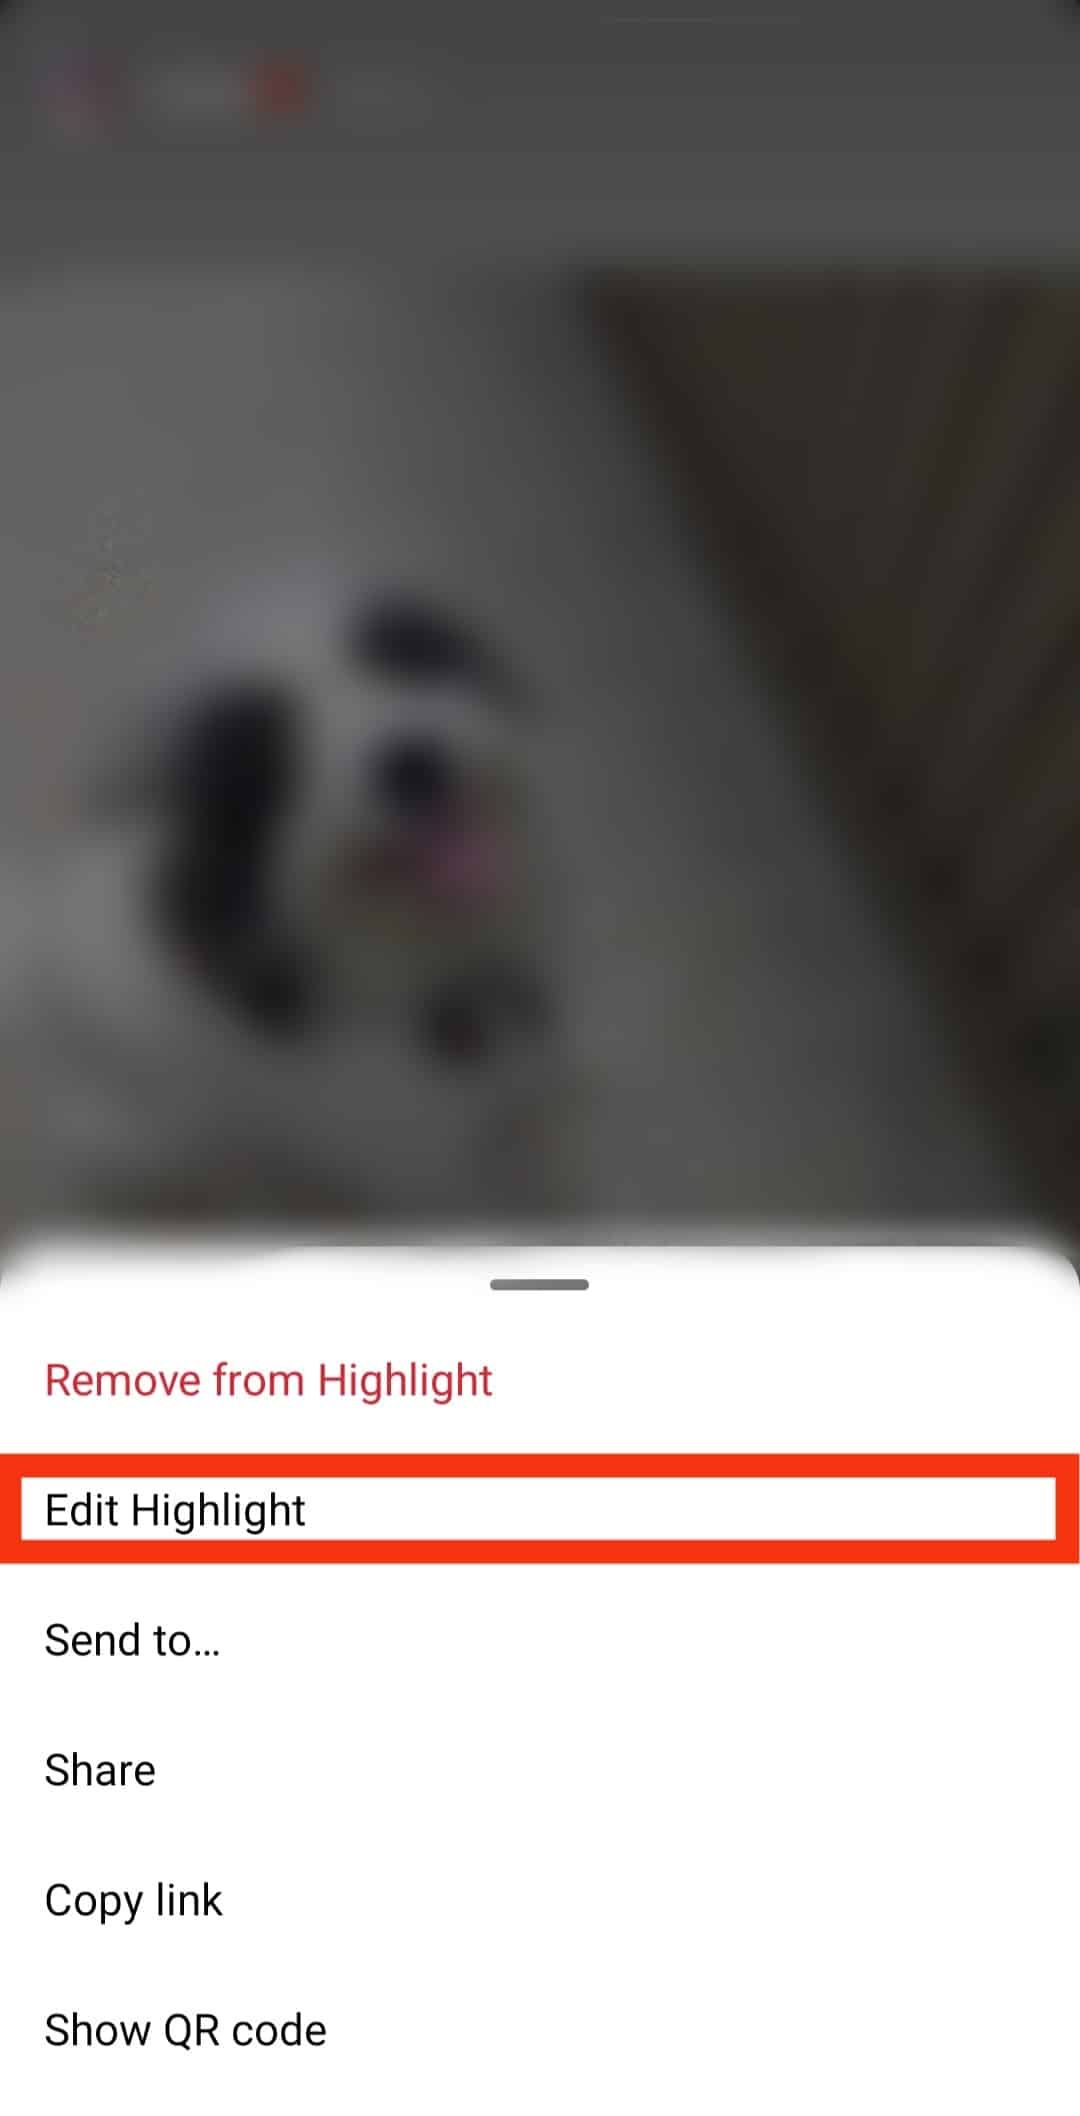 Select Edit Highlight